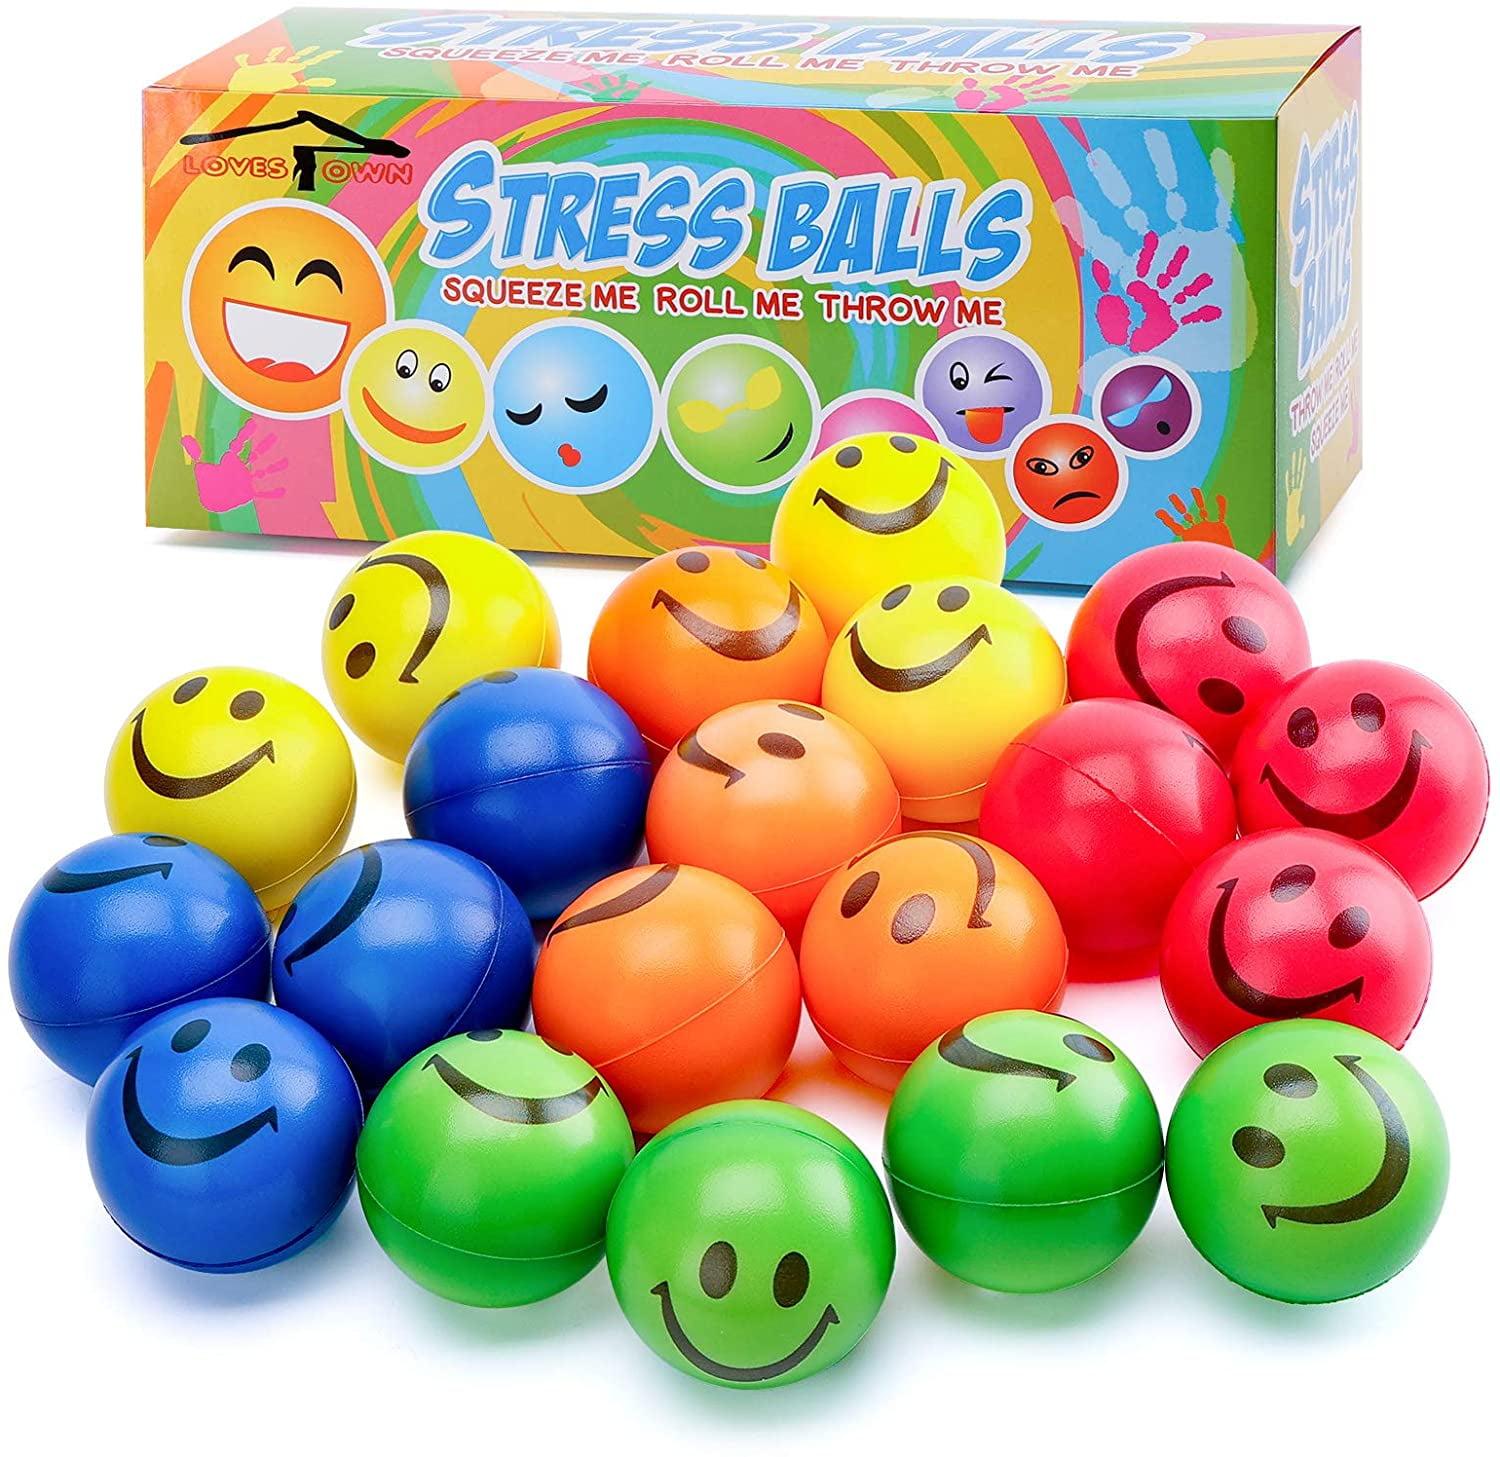 5 5cm Emoji PU Soft Stress Ball x 24 ROUND